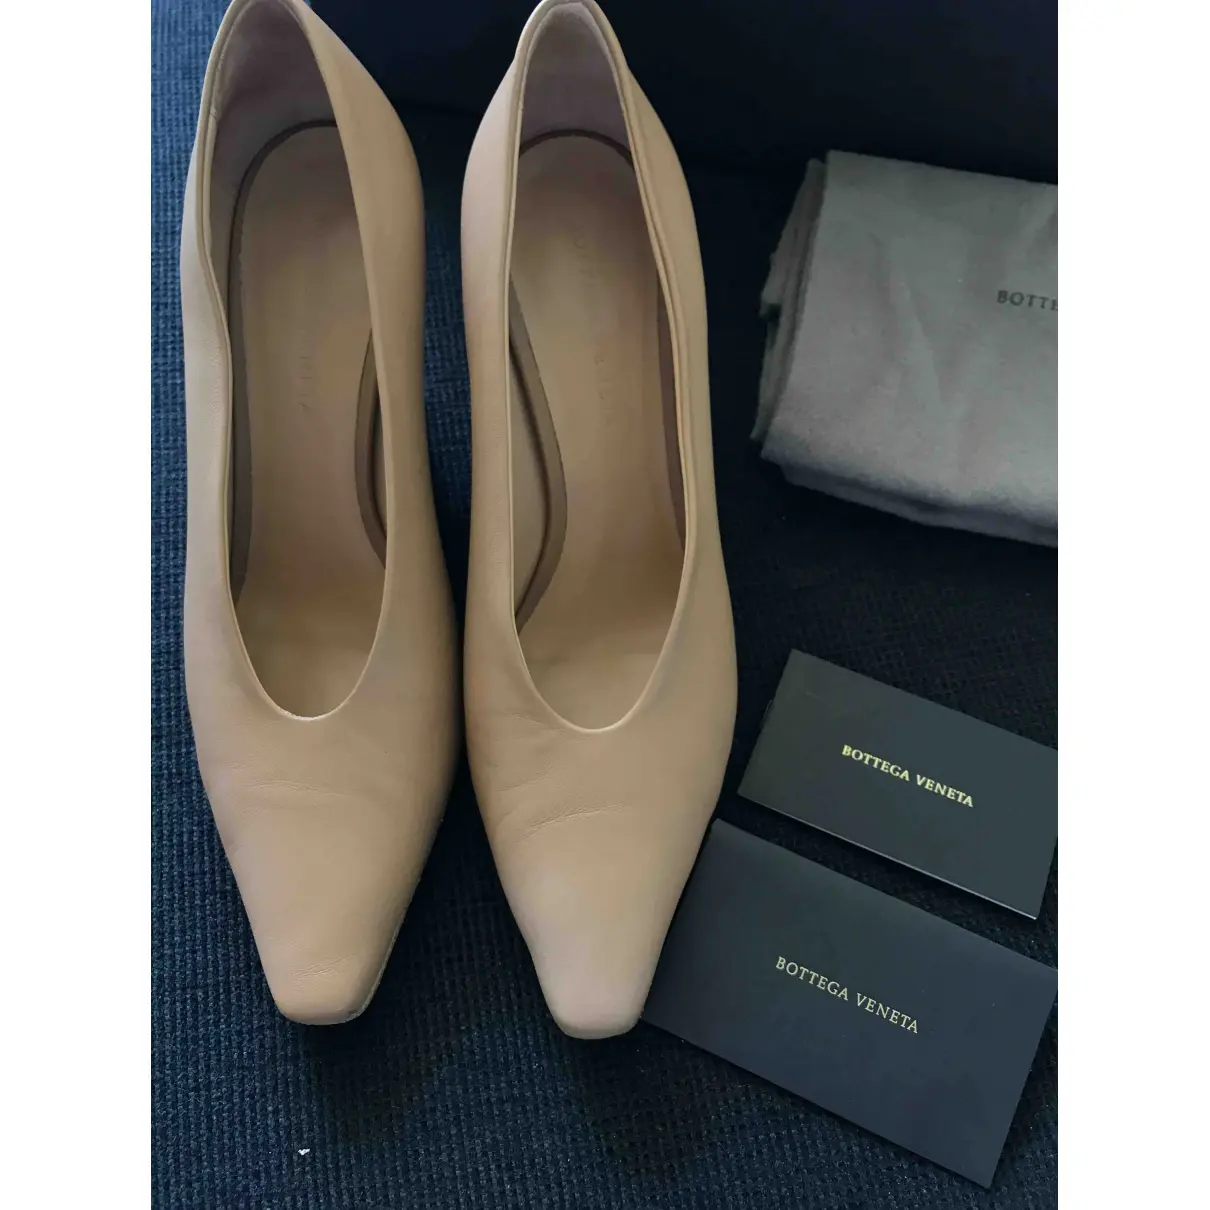 Buy Bottega Veneta Almond leather heels online